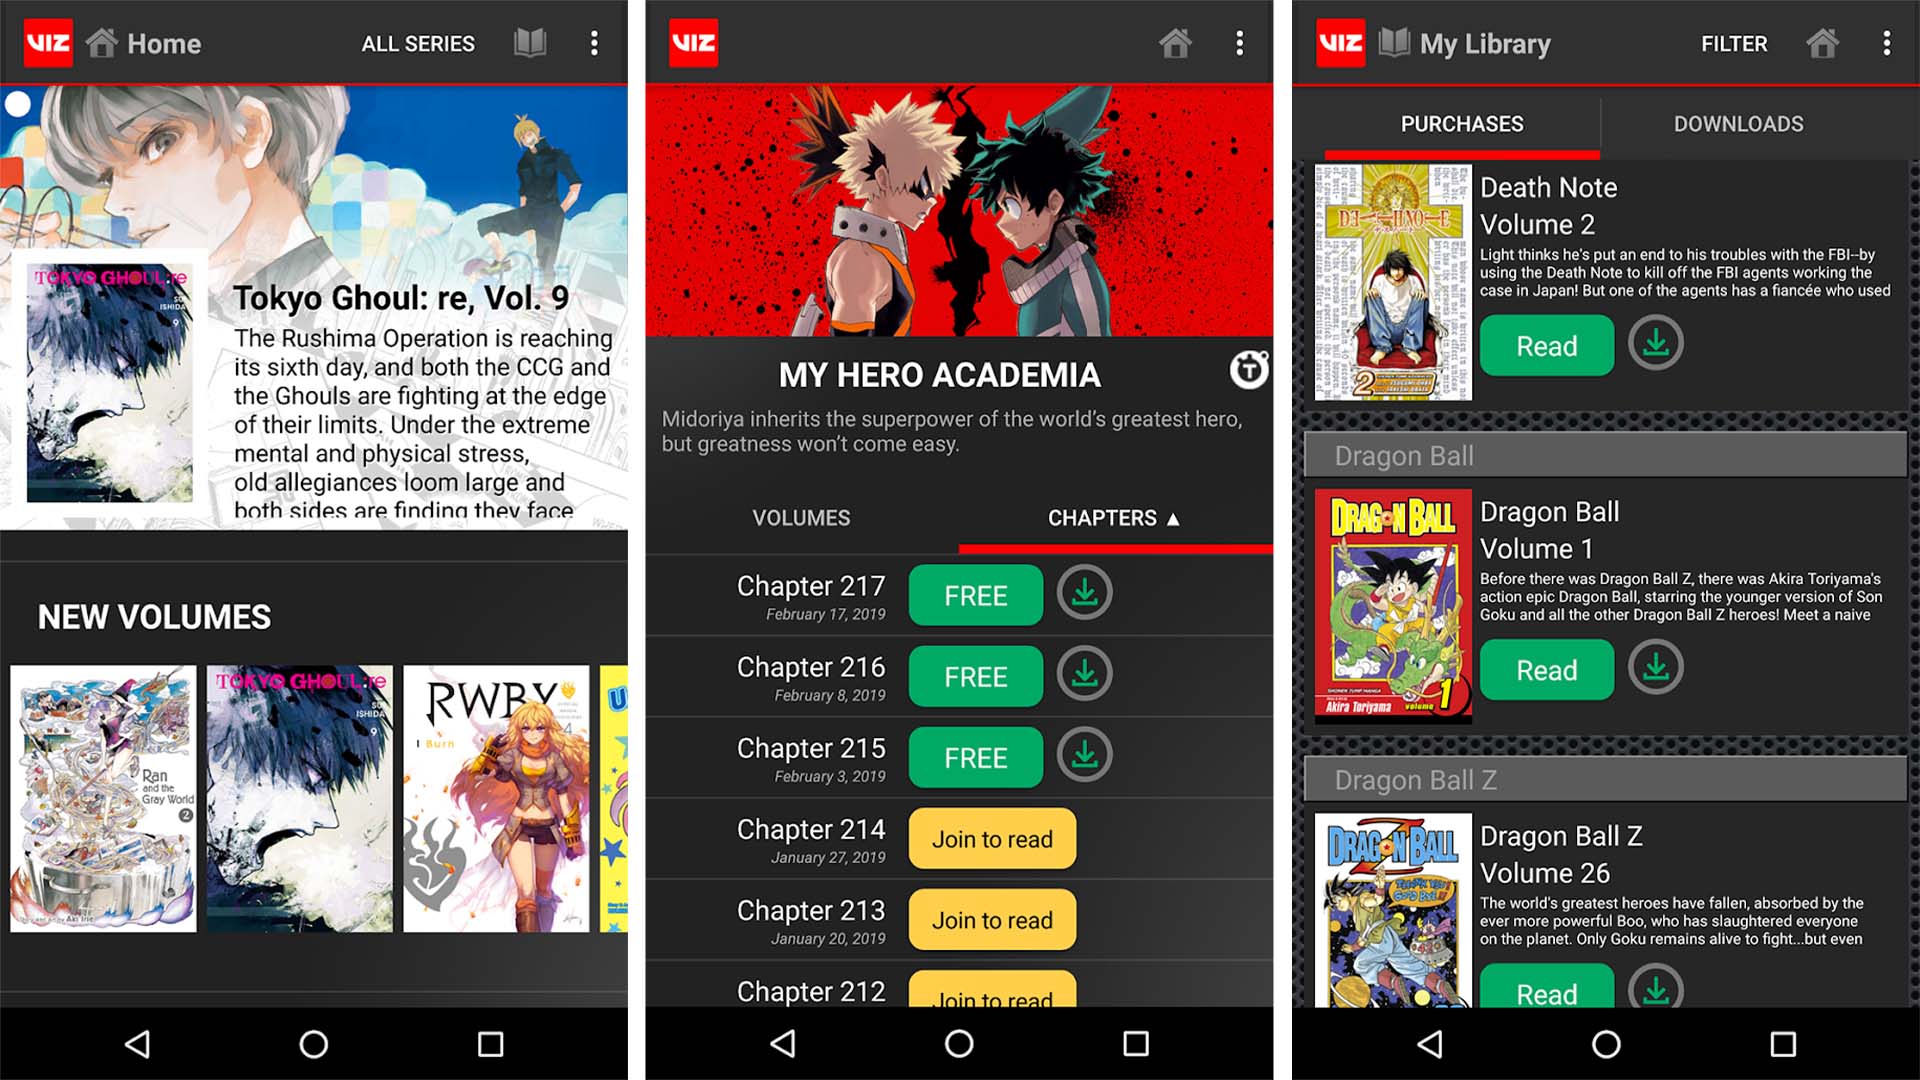 Free best new anime app!🫨😎, best anime streaming apps